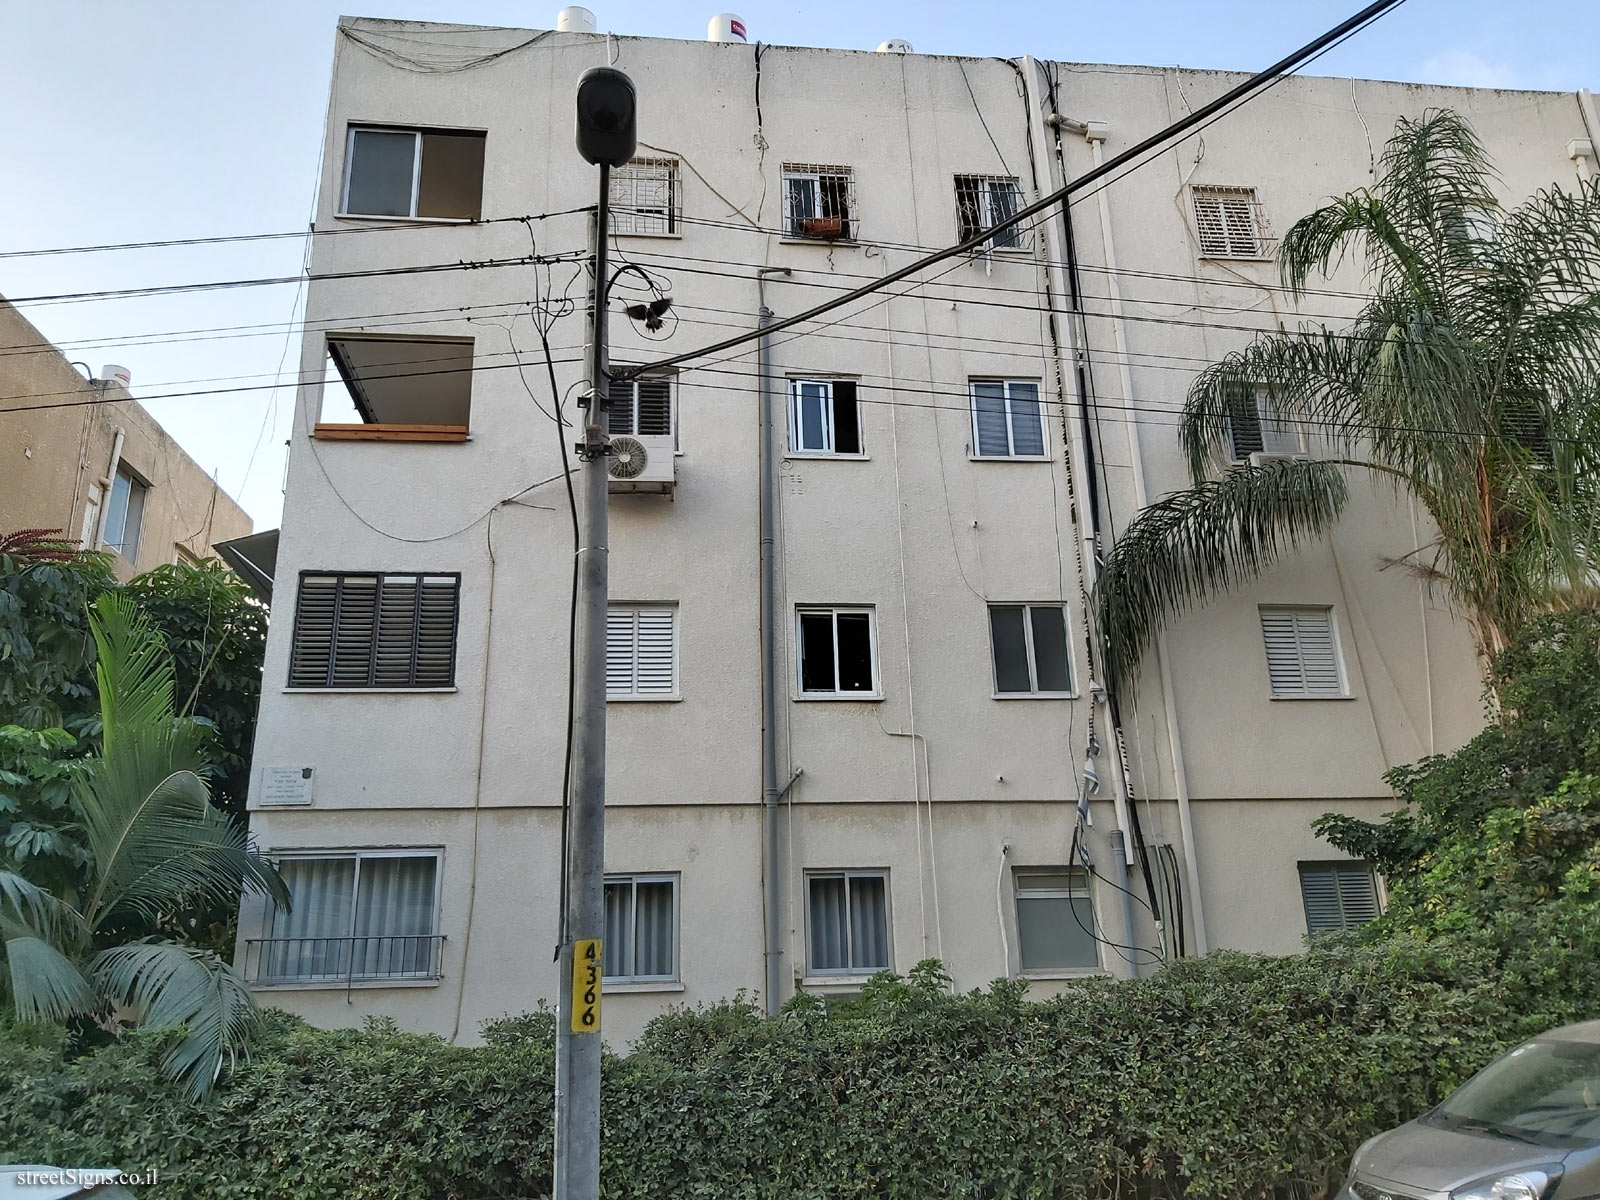 The house of Sionah Tagger - Shim’on ha-Tarsi St 32, Tel Aviv-Yafo, Israel